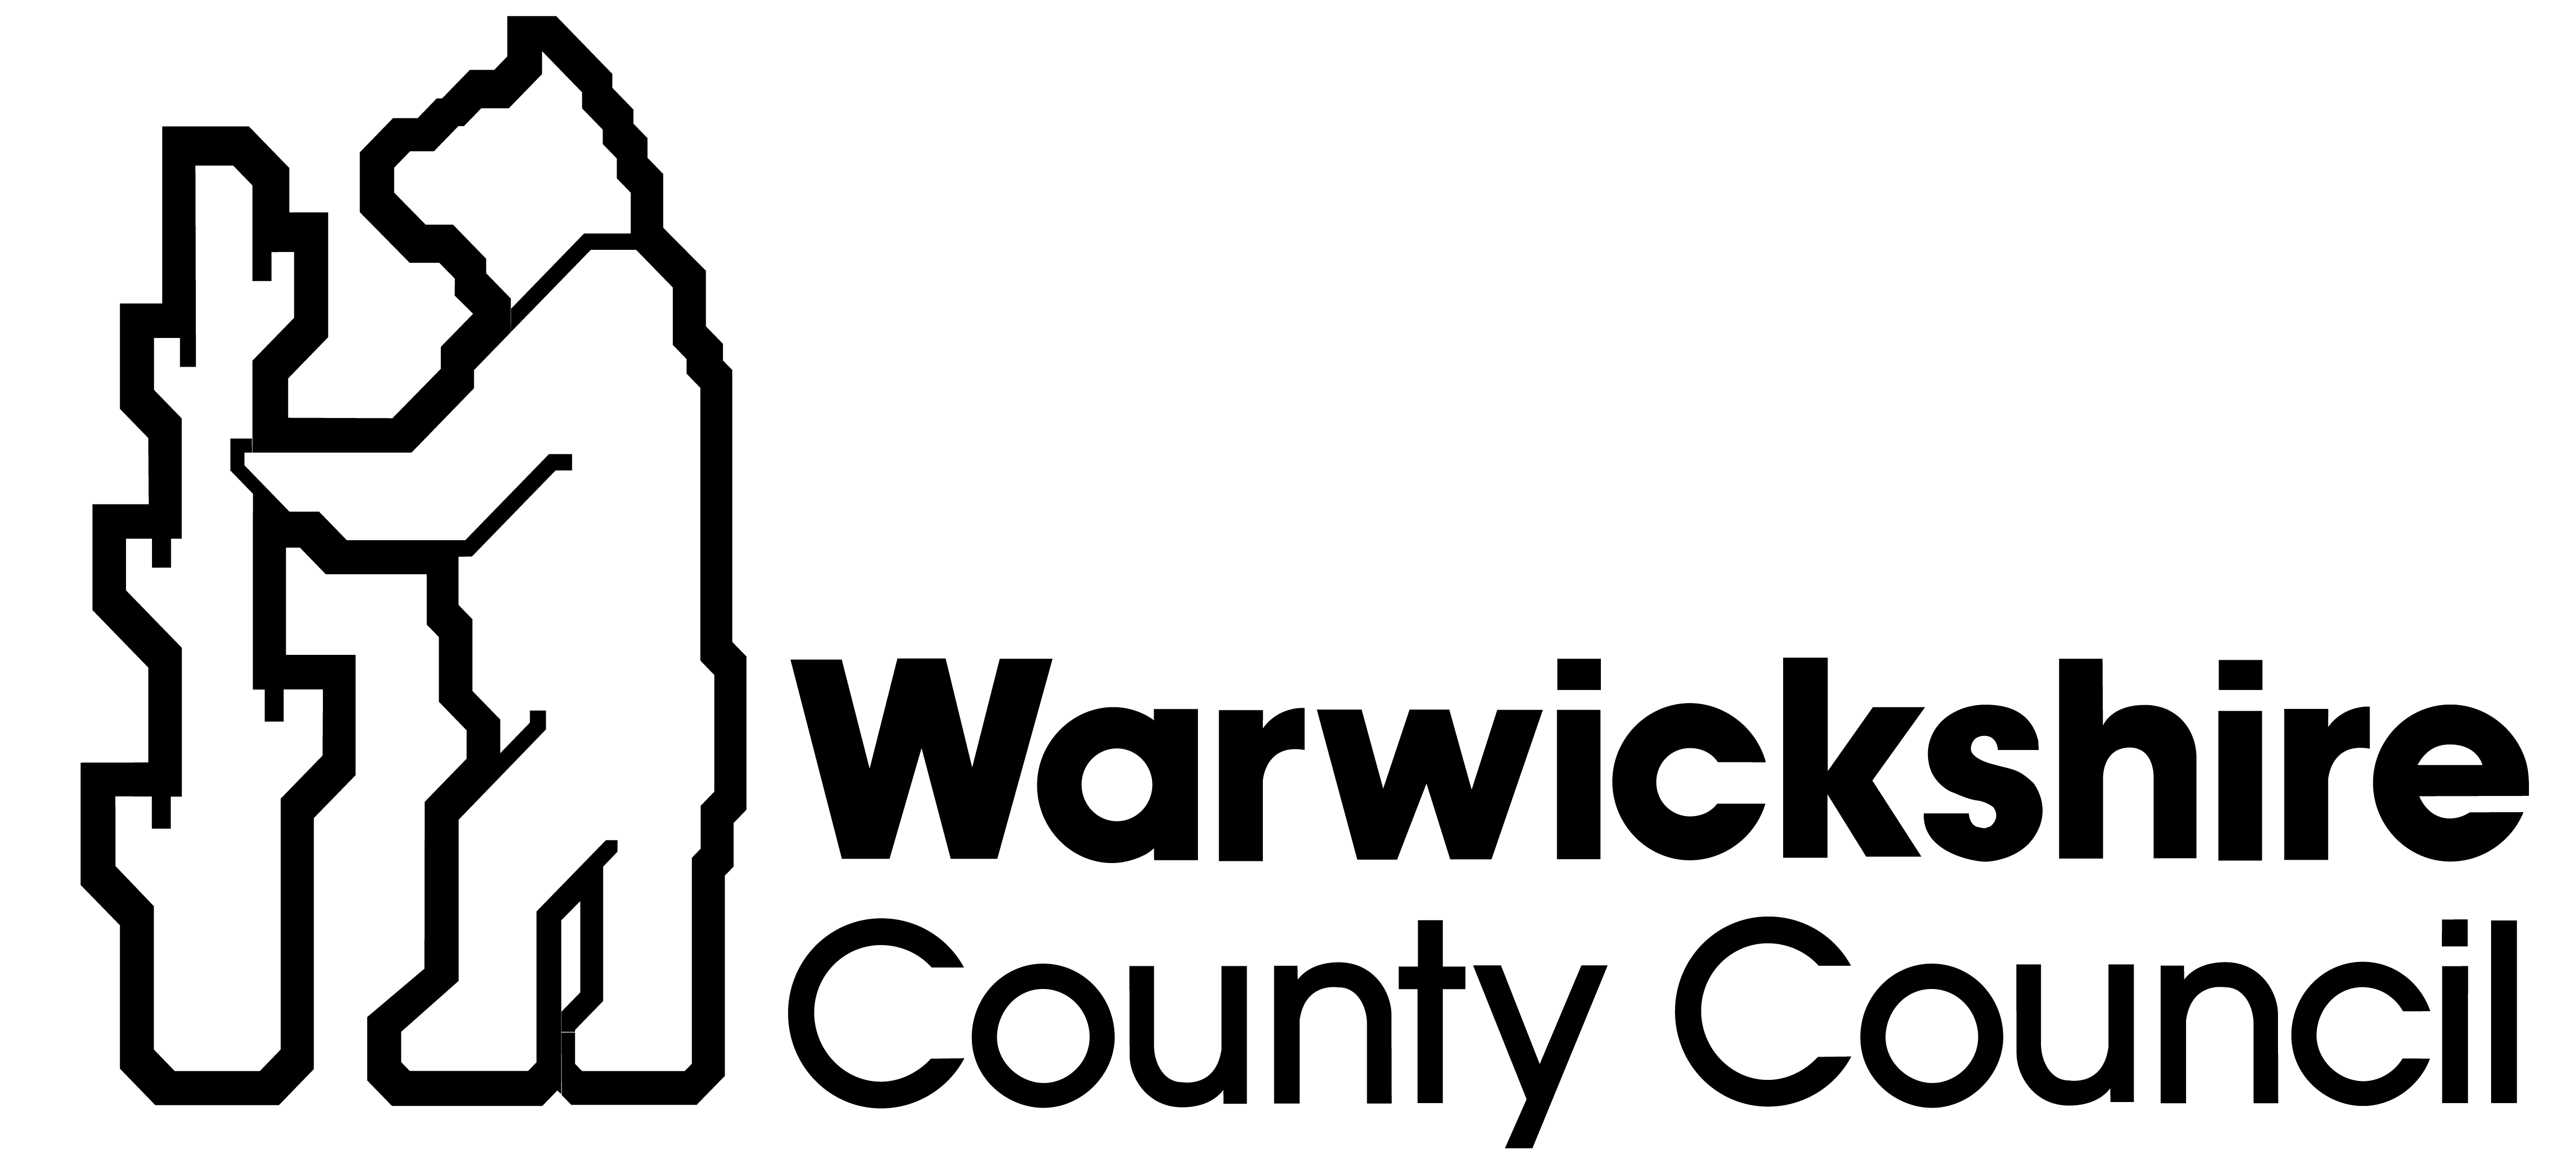 Wcc logo black on transparent